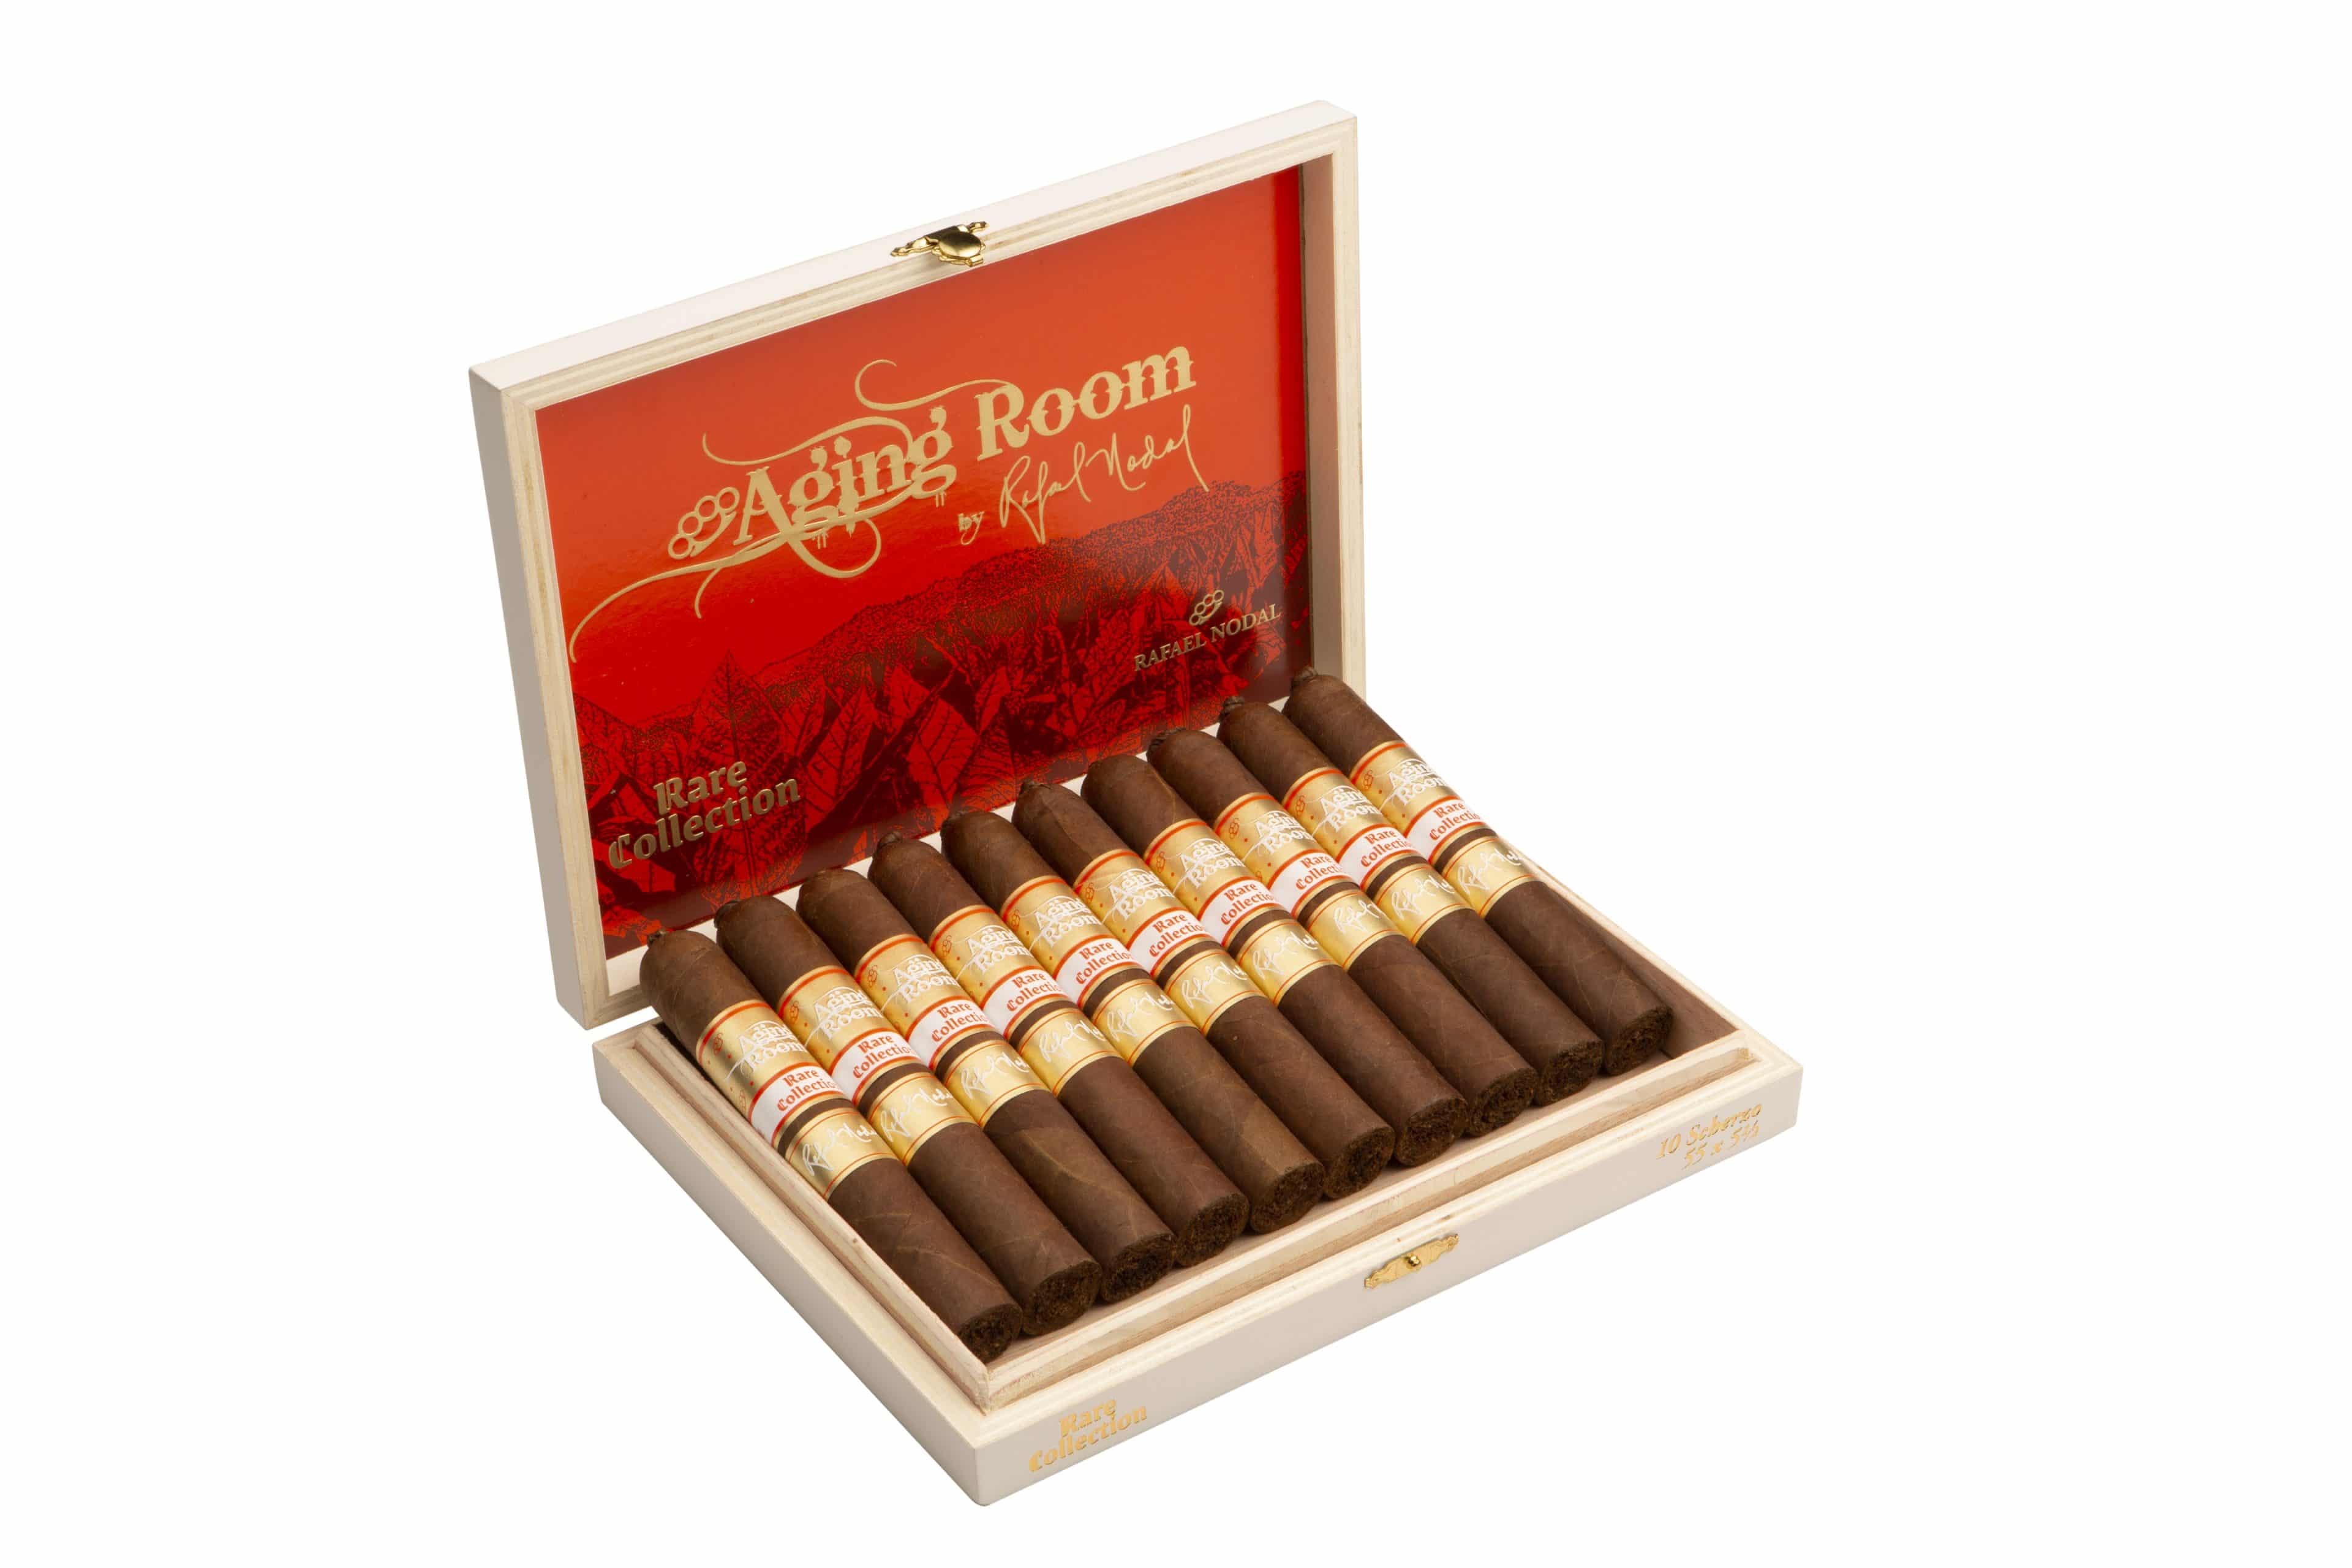 Altadis U.S.A. Announces Aging Room by Rafael Nodal Rare Collection - Cigar News